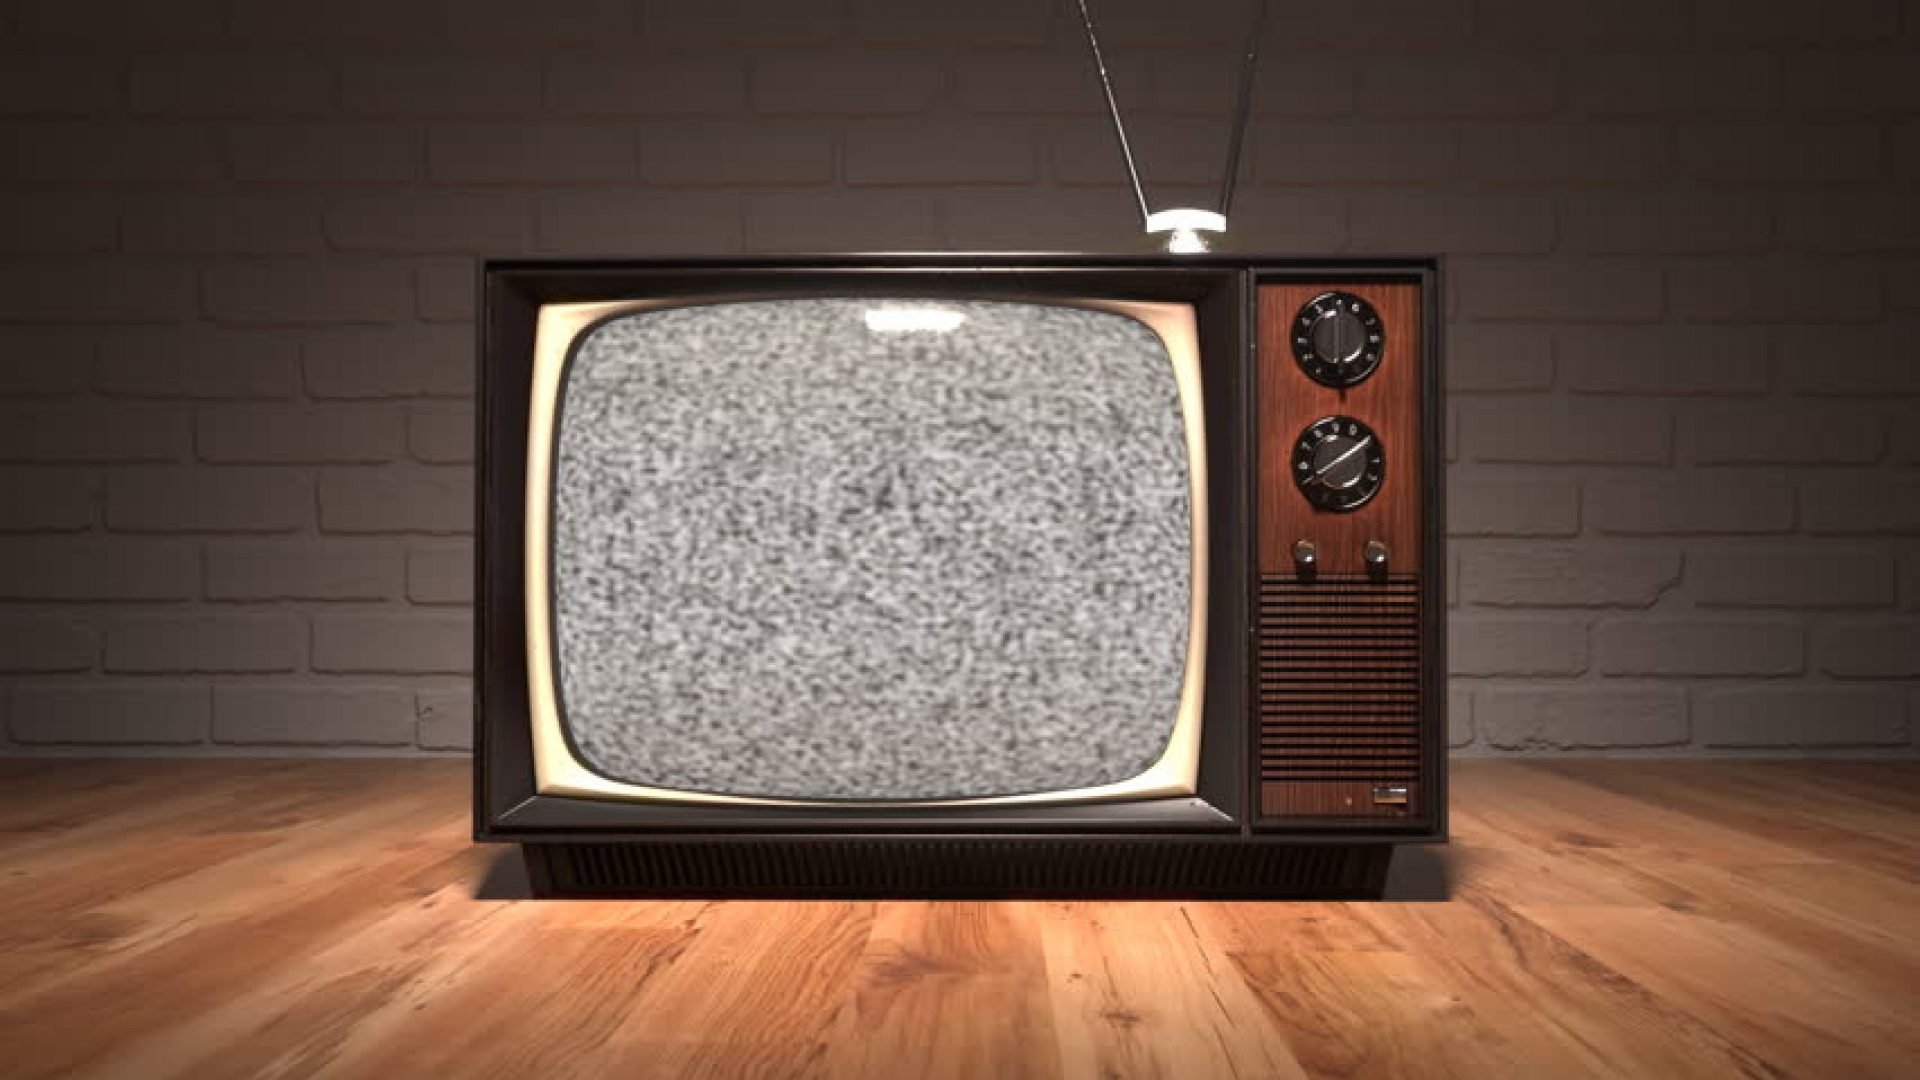 Телевизионный экран. Телевизор Roadstar. Старый телевизор. Ретро телевизор. Винтажный телевизор.